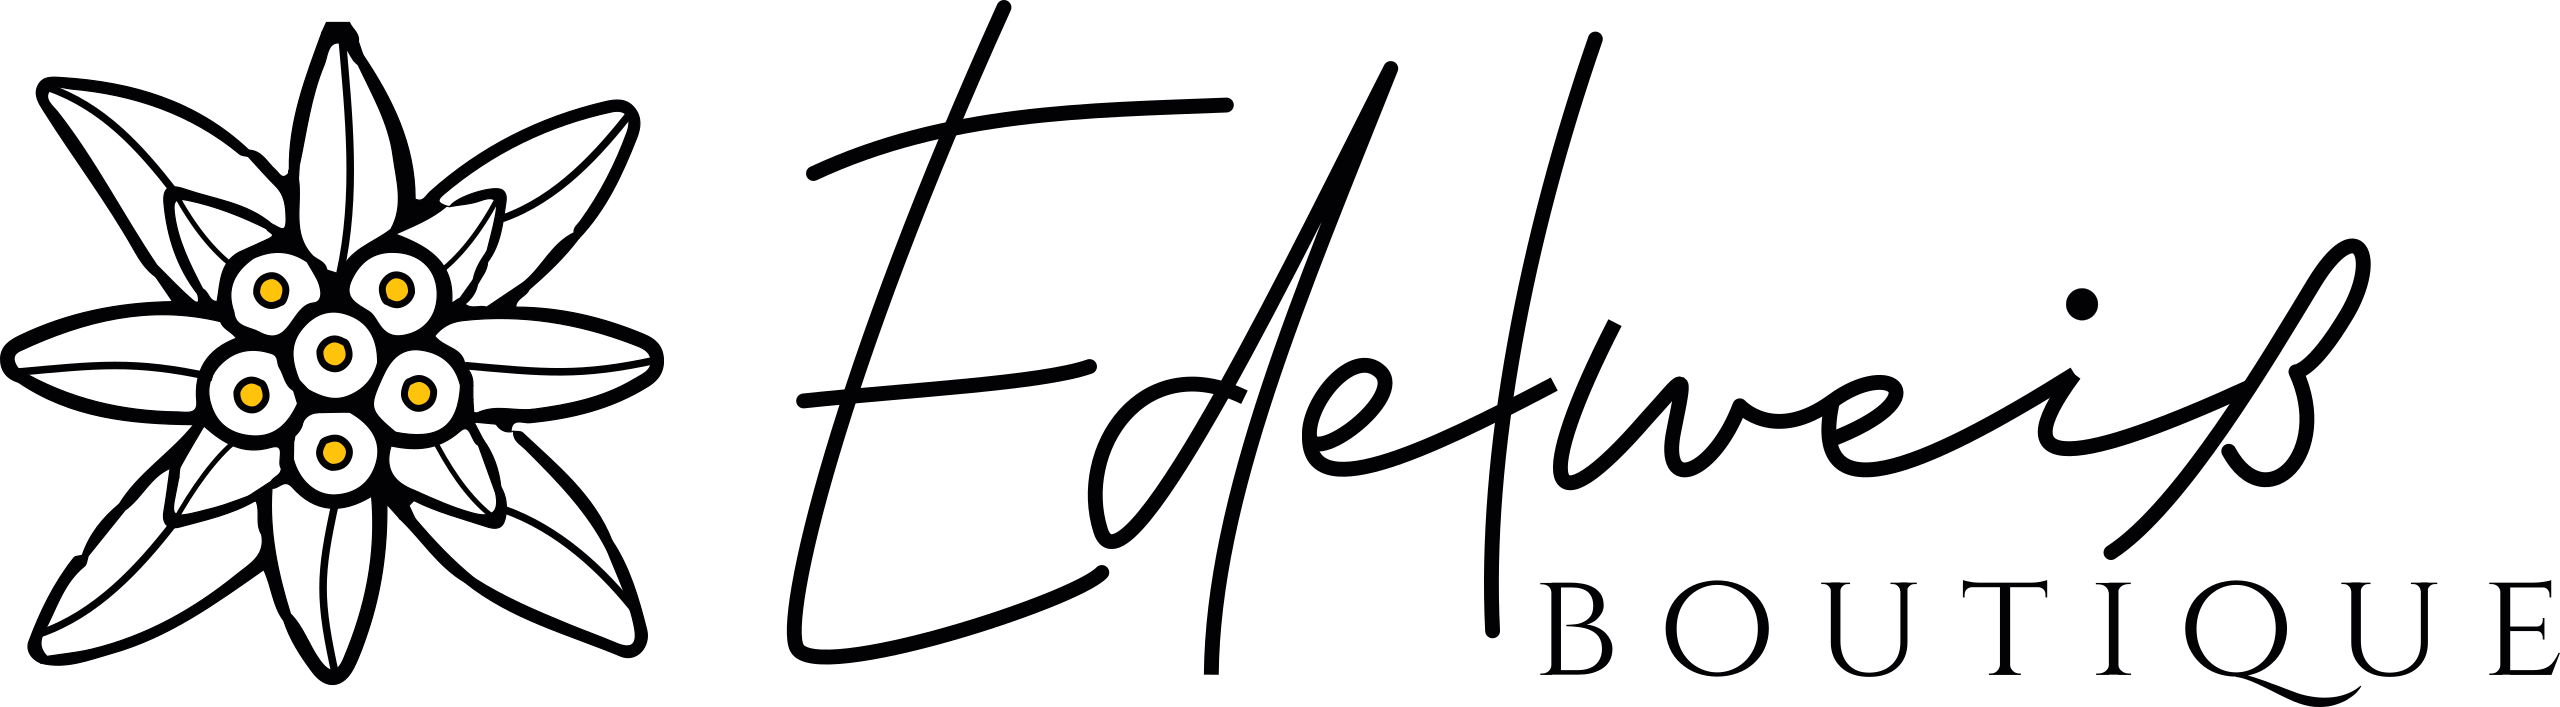 Edelweiss Logo Rare Mountain Flower That Stock Vector (Royalty Free)  1568214892 | Shutterstock